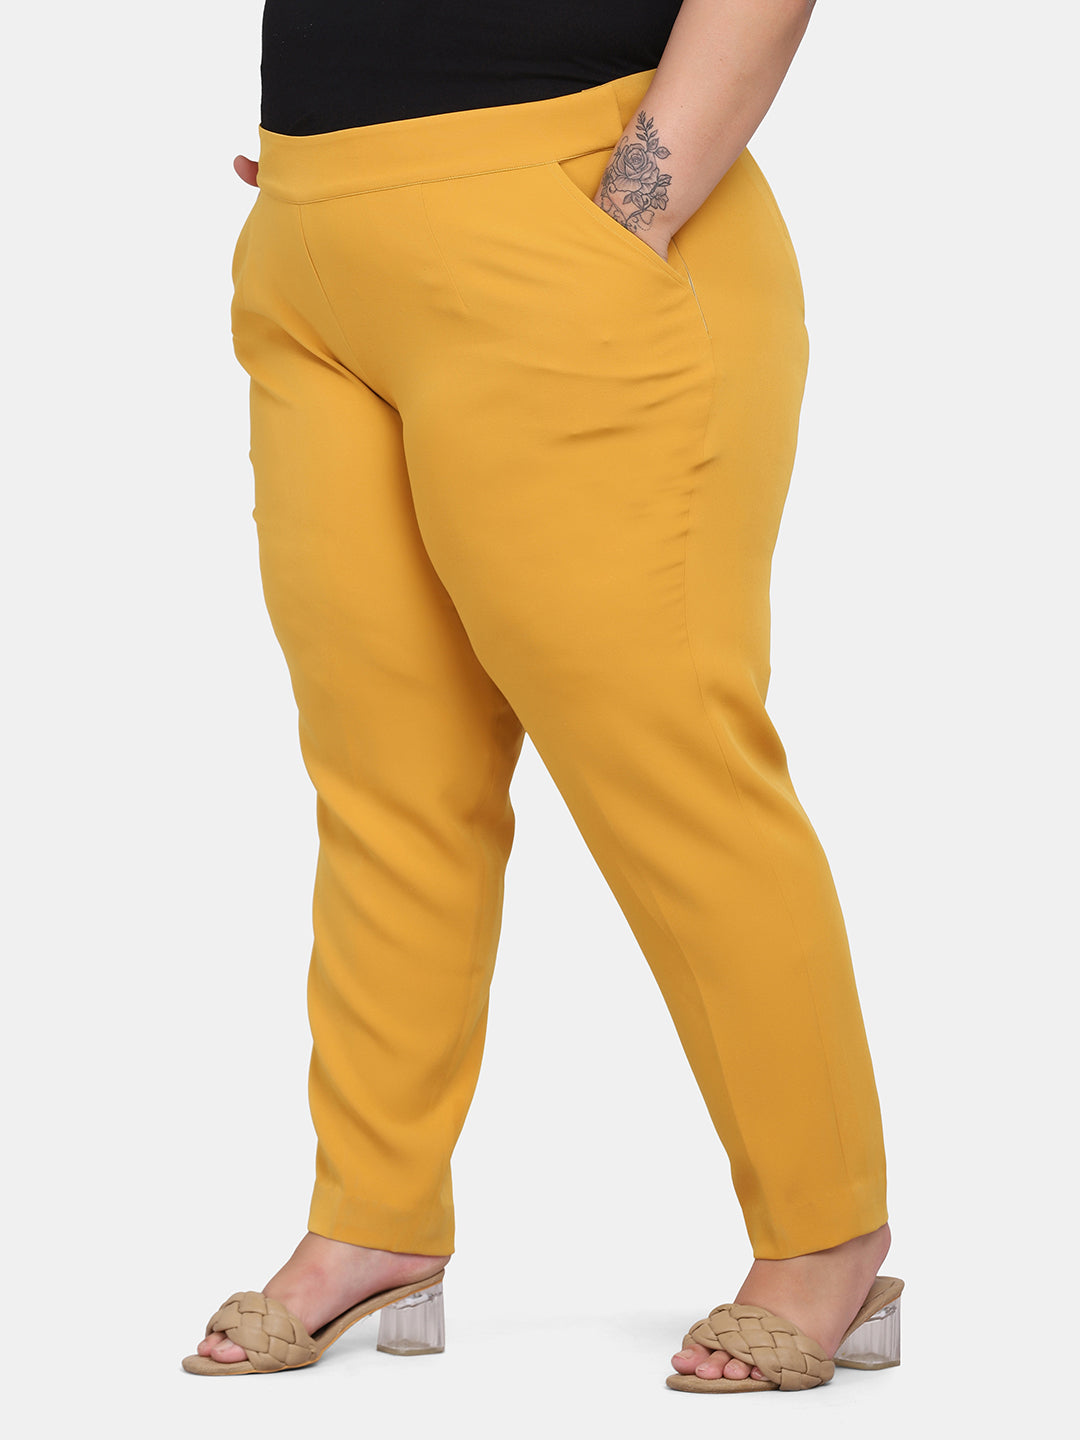 Buy EVLIN Women Mustard Yellow Slim Fit Solid Cigarette Trousers  SizeMedium Pack of 2 at Amazonin